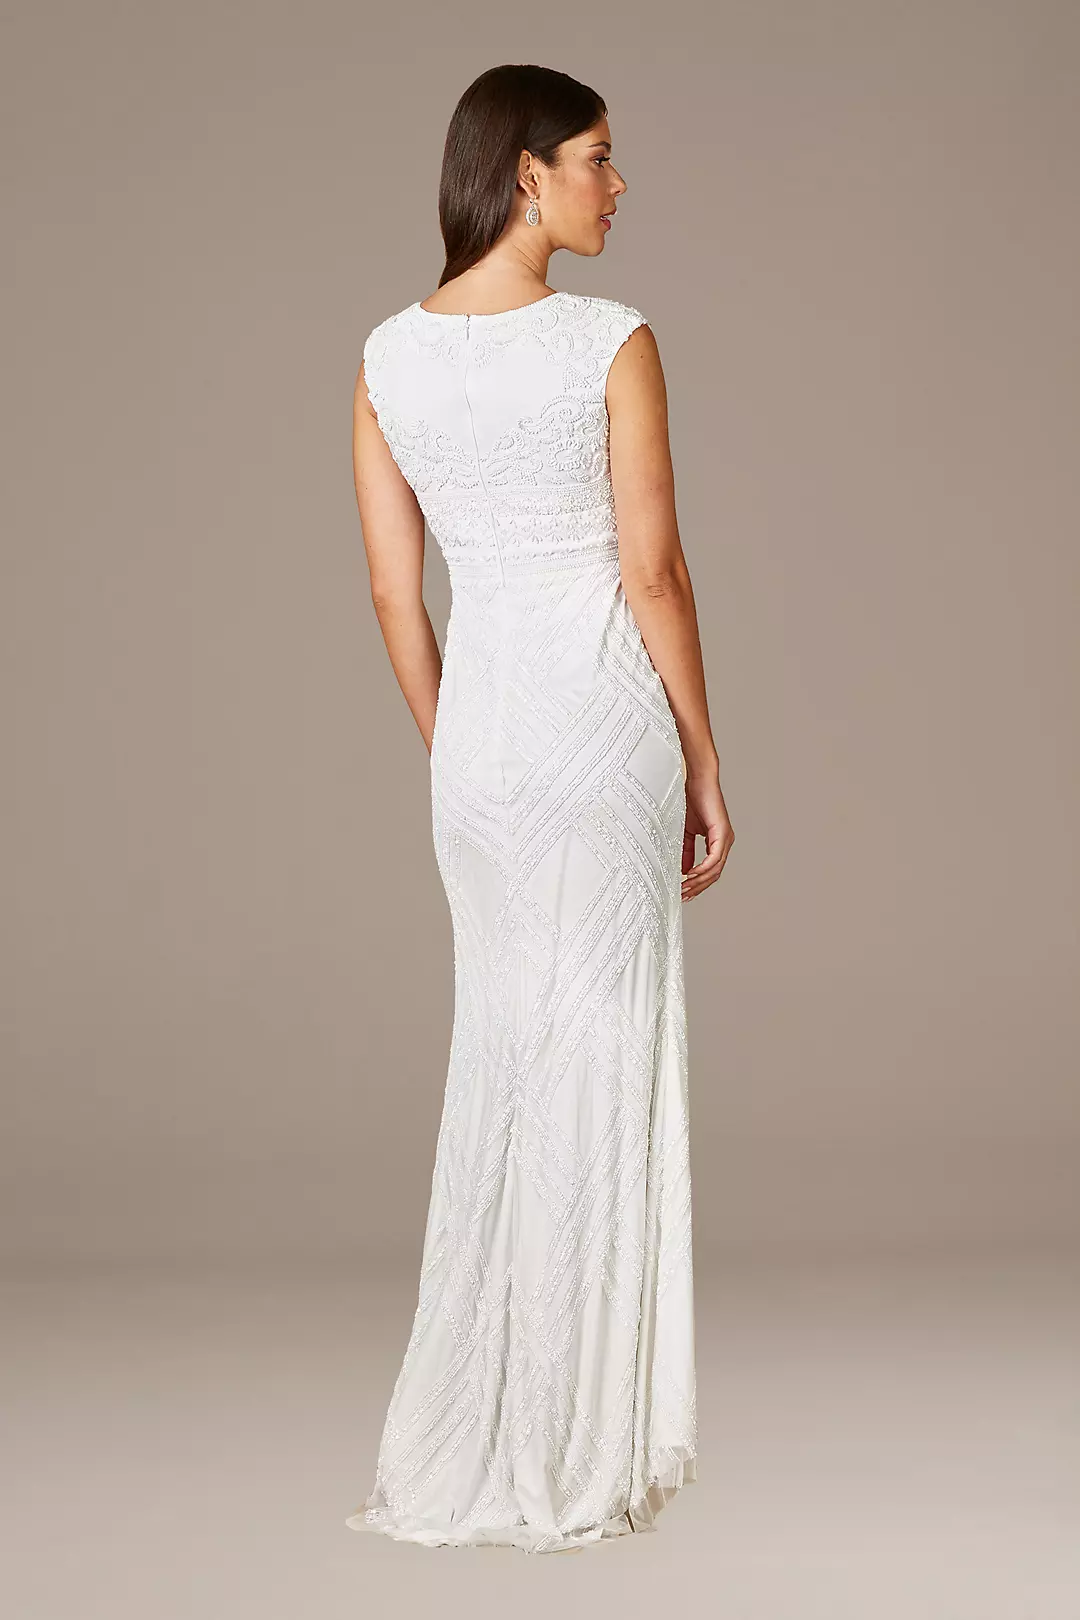 Lara Fabiana Cap Sleeve Beaded Wedding Gown Image 2